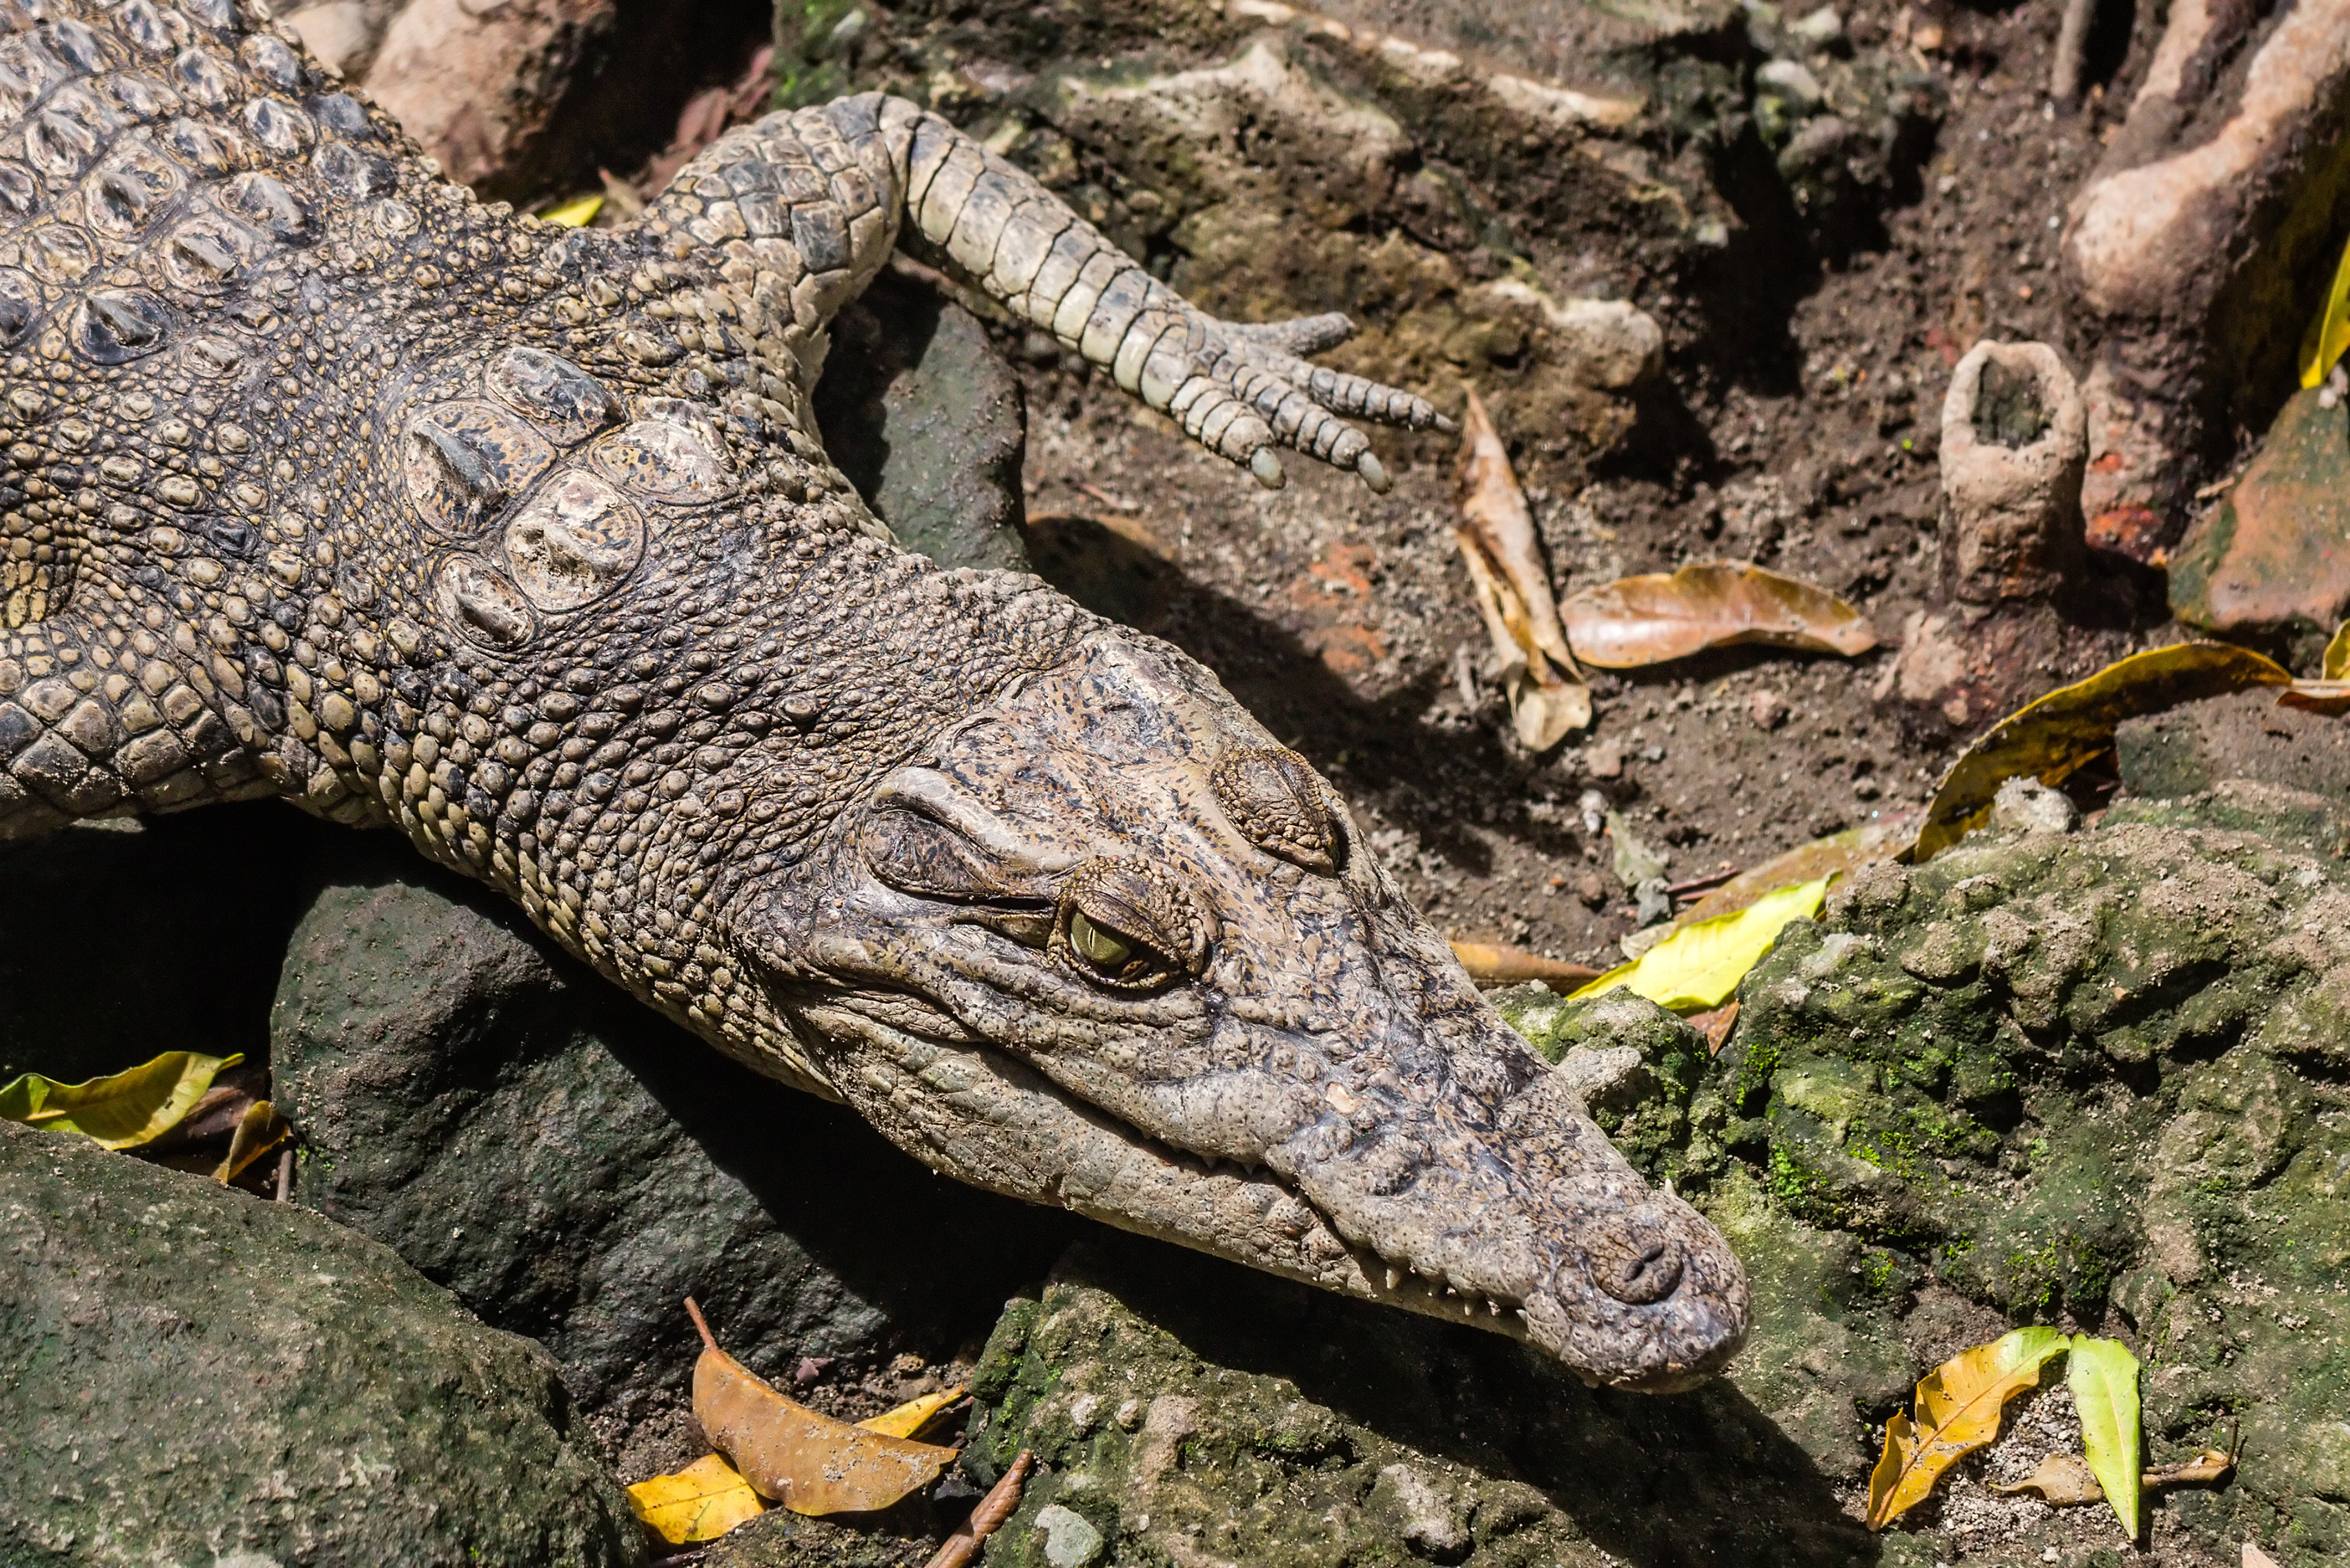 Saltwater crocodile (Crocodylus porosus), Gembira Loka Zoo, 2015-03-15 03